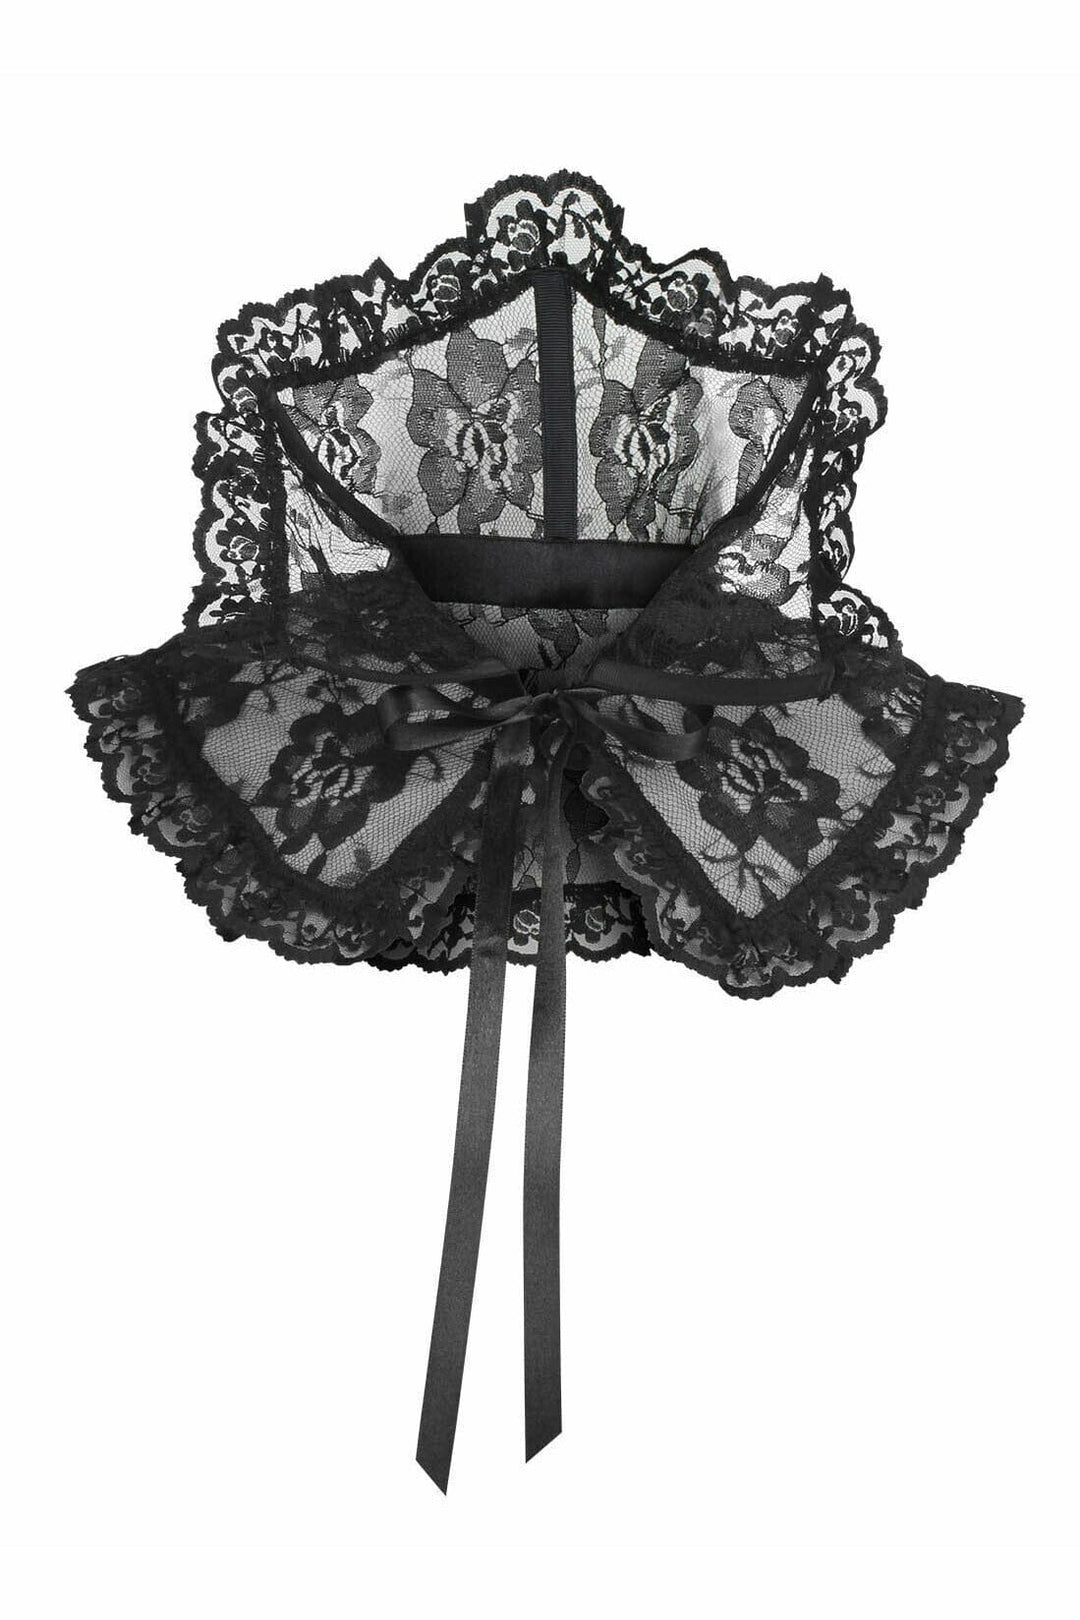 Black Lace Neck Collar-Costume Kits-Daisy Corsets-Black-O/S-SEXYSHOES.COM